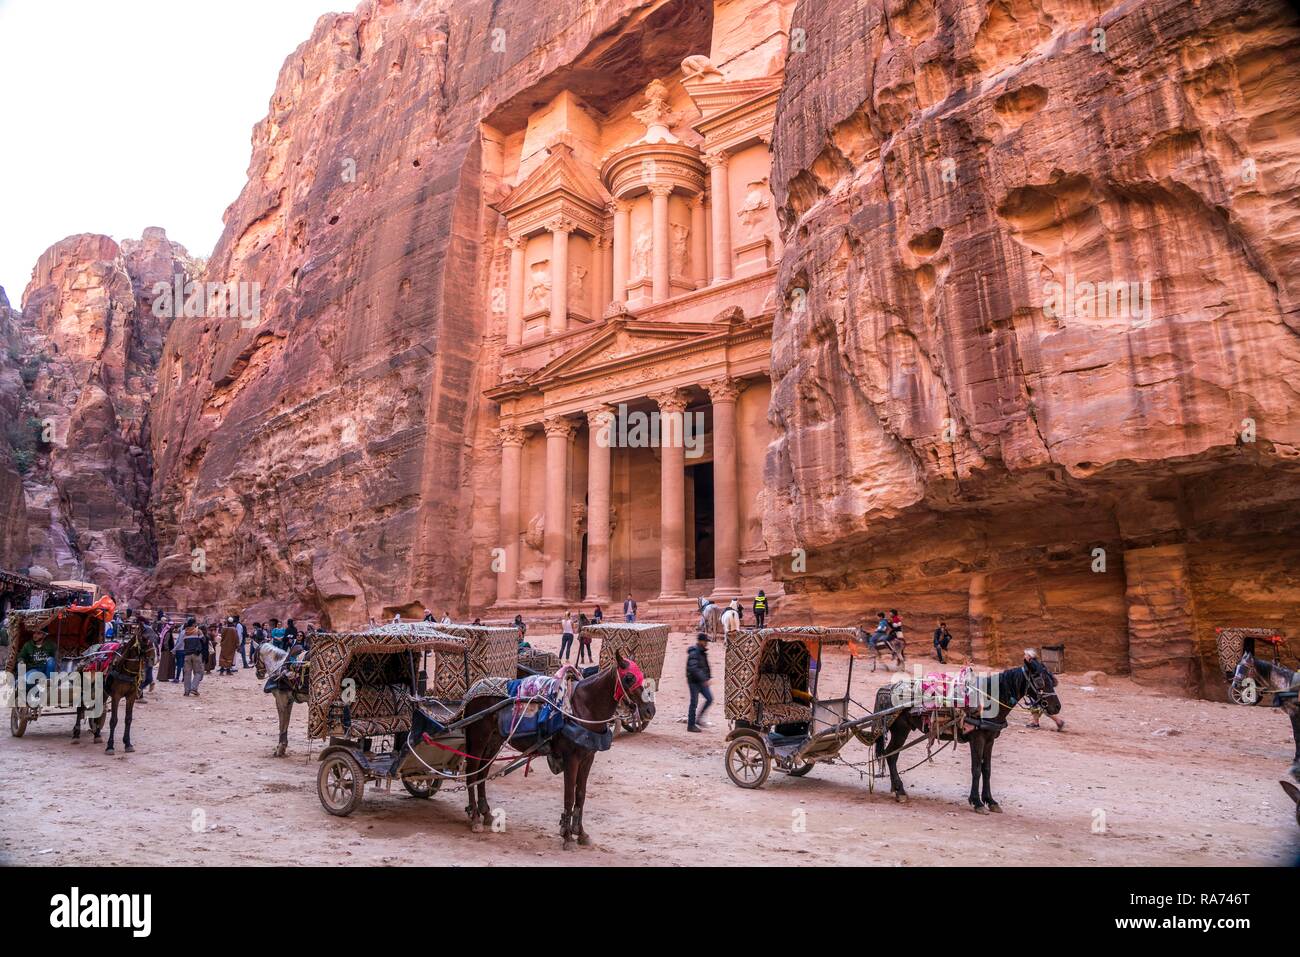 Carriages in front of the treasure house of Pharaoh Khazne al-Firaun, Petra, Jordan Stock Photo